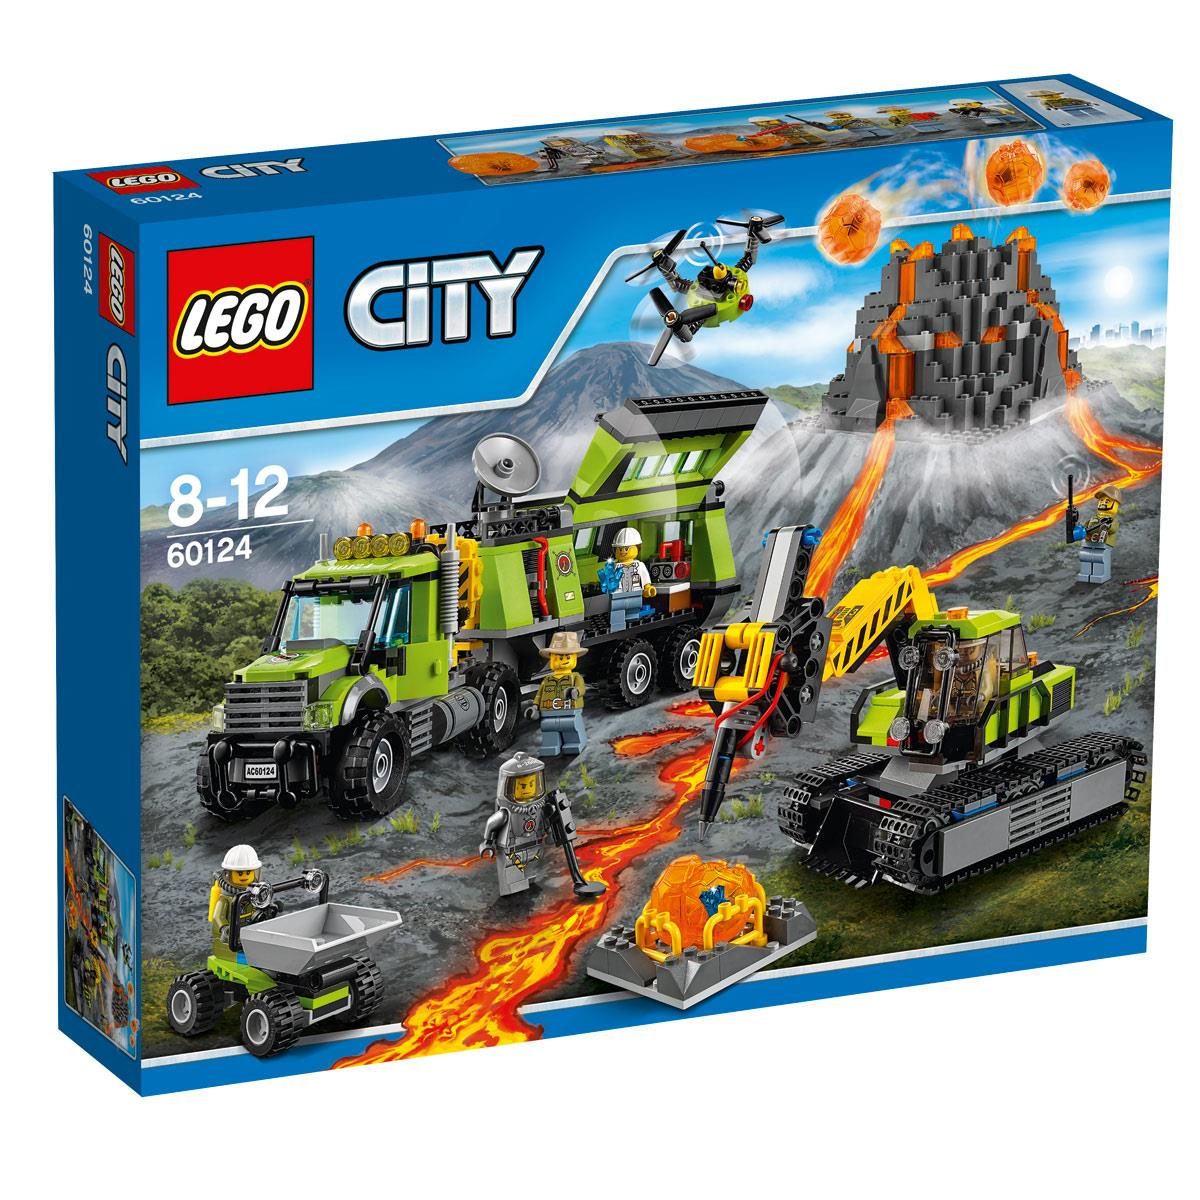 LEGO City Volcano Exploration Base - 60124